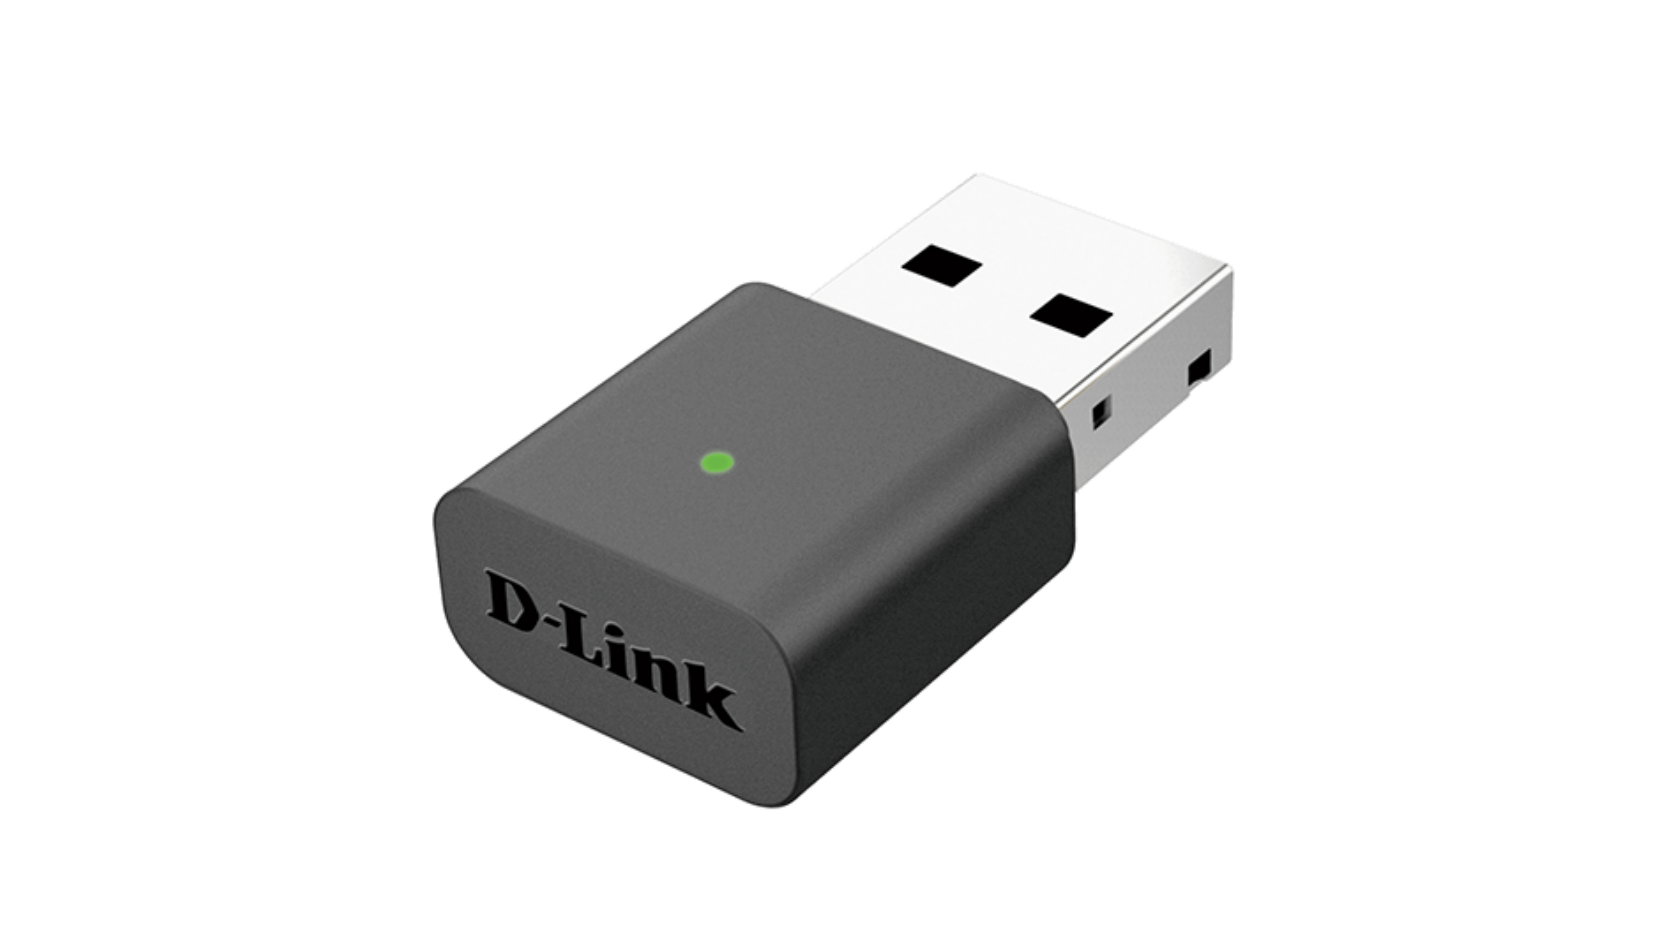 D-Link DWA-131 N300 Usb2.0 Nano Adapter